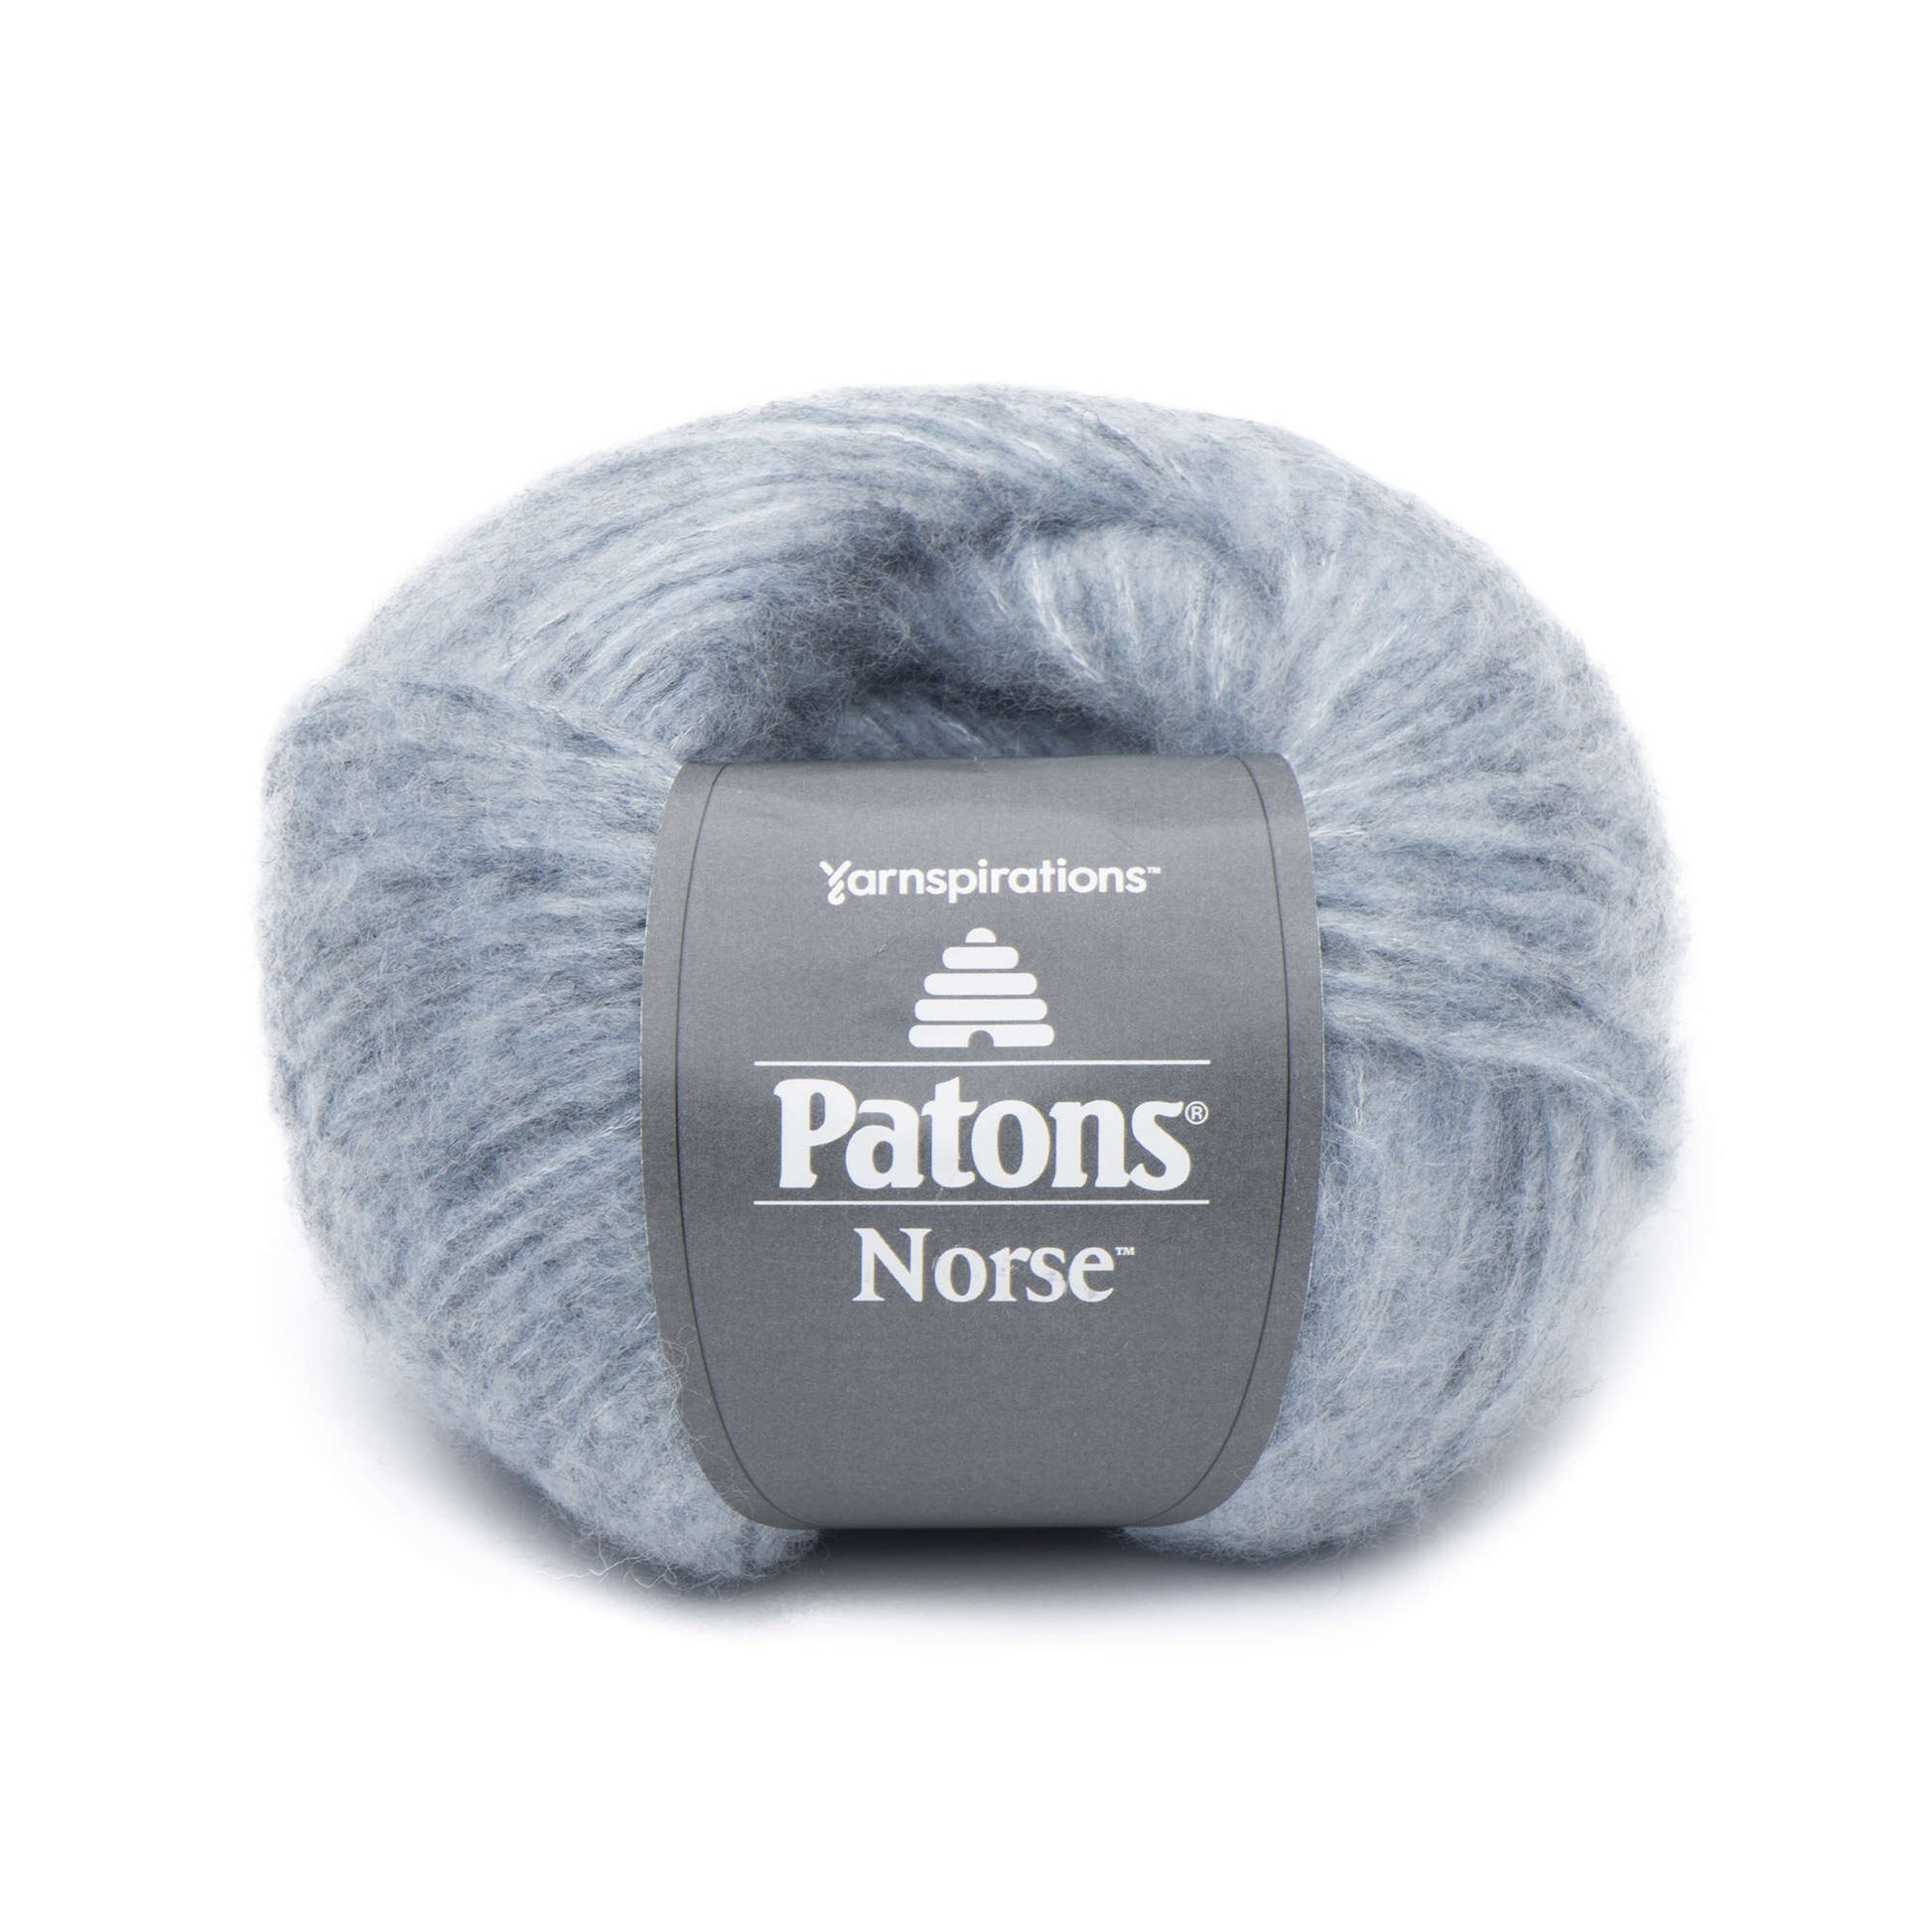 Patons Norse Yarn - Clearance shades Gray Denim